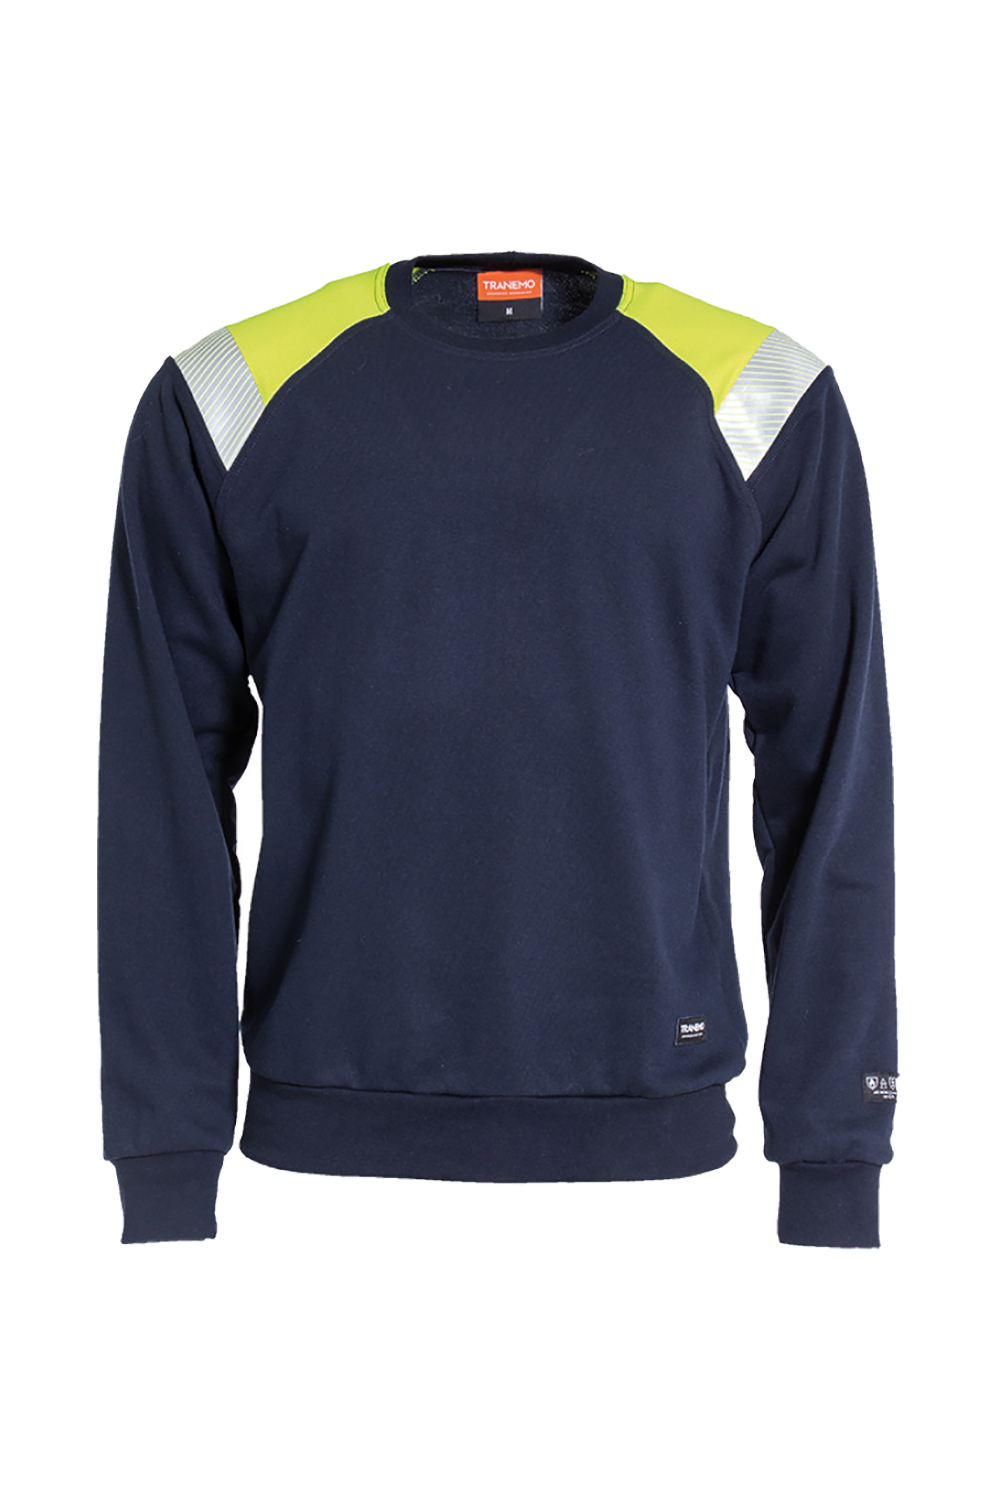 FR Sweatshirt 6375 89 / Tranemo / Workwear